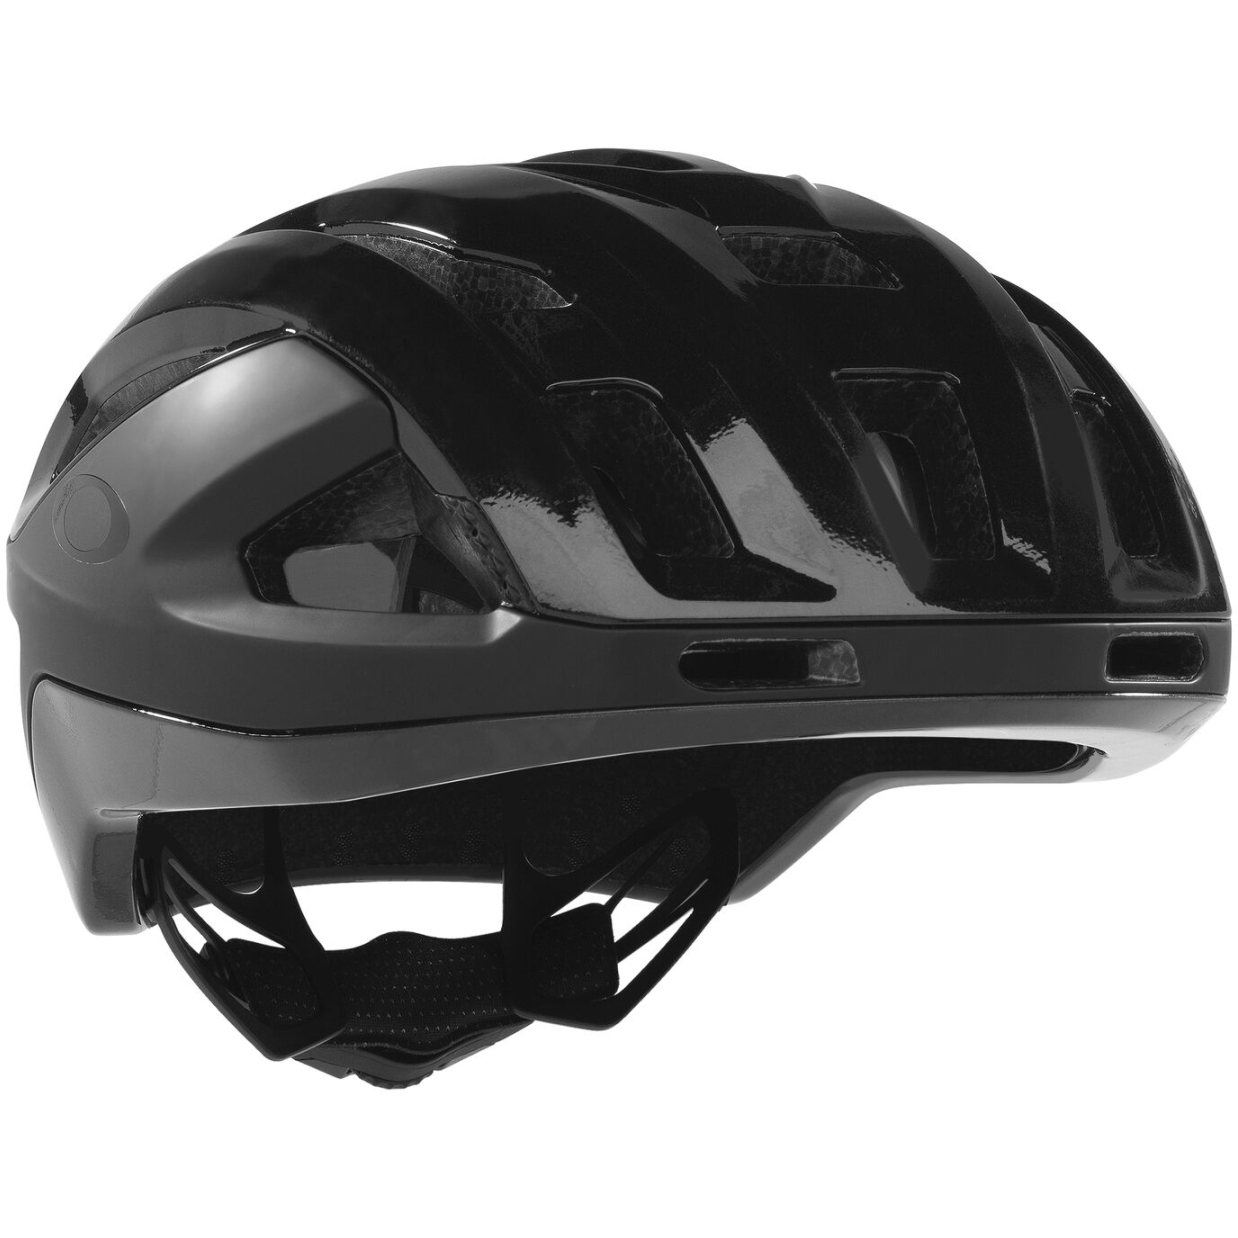 Productfoto van Oakley ARO3 Endurance MIPS Helm - Polished/Matte Black/Polished Reflective Black